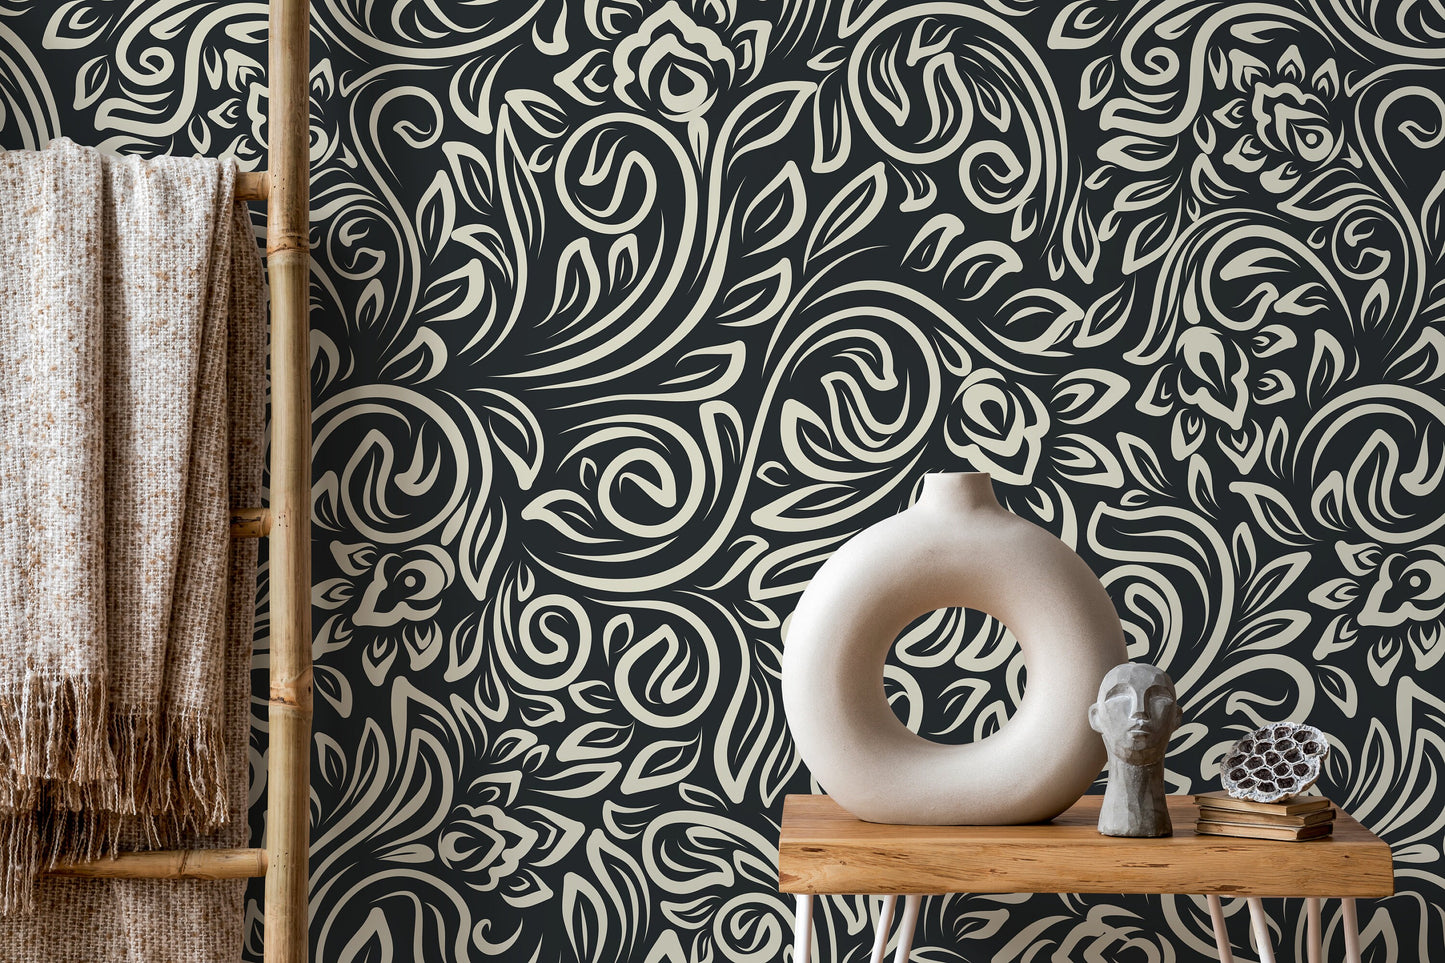 Dark Modern Floral Wallpaper / Peel and Stick Wallpaper Removable Wallpaper Home Decor Wall Art Wall Decor Room Decor - D158